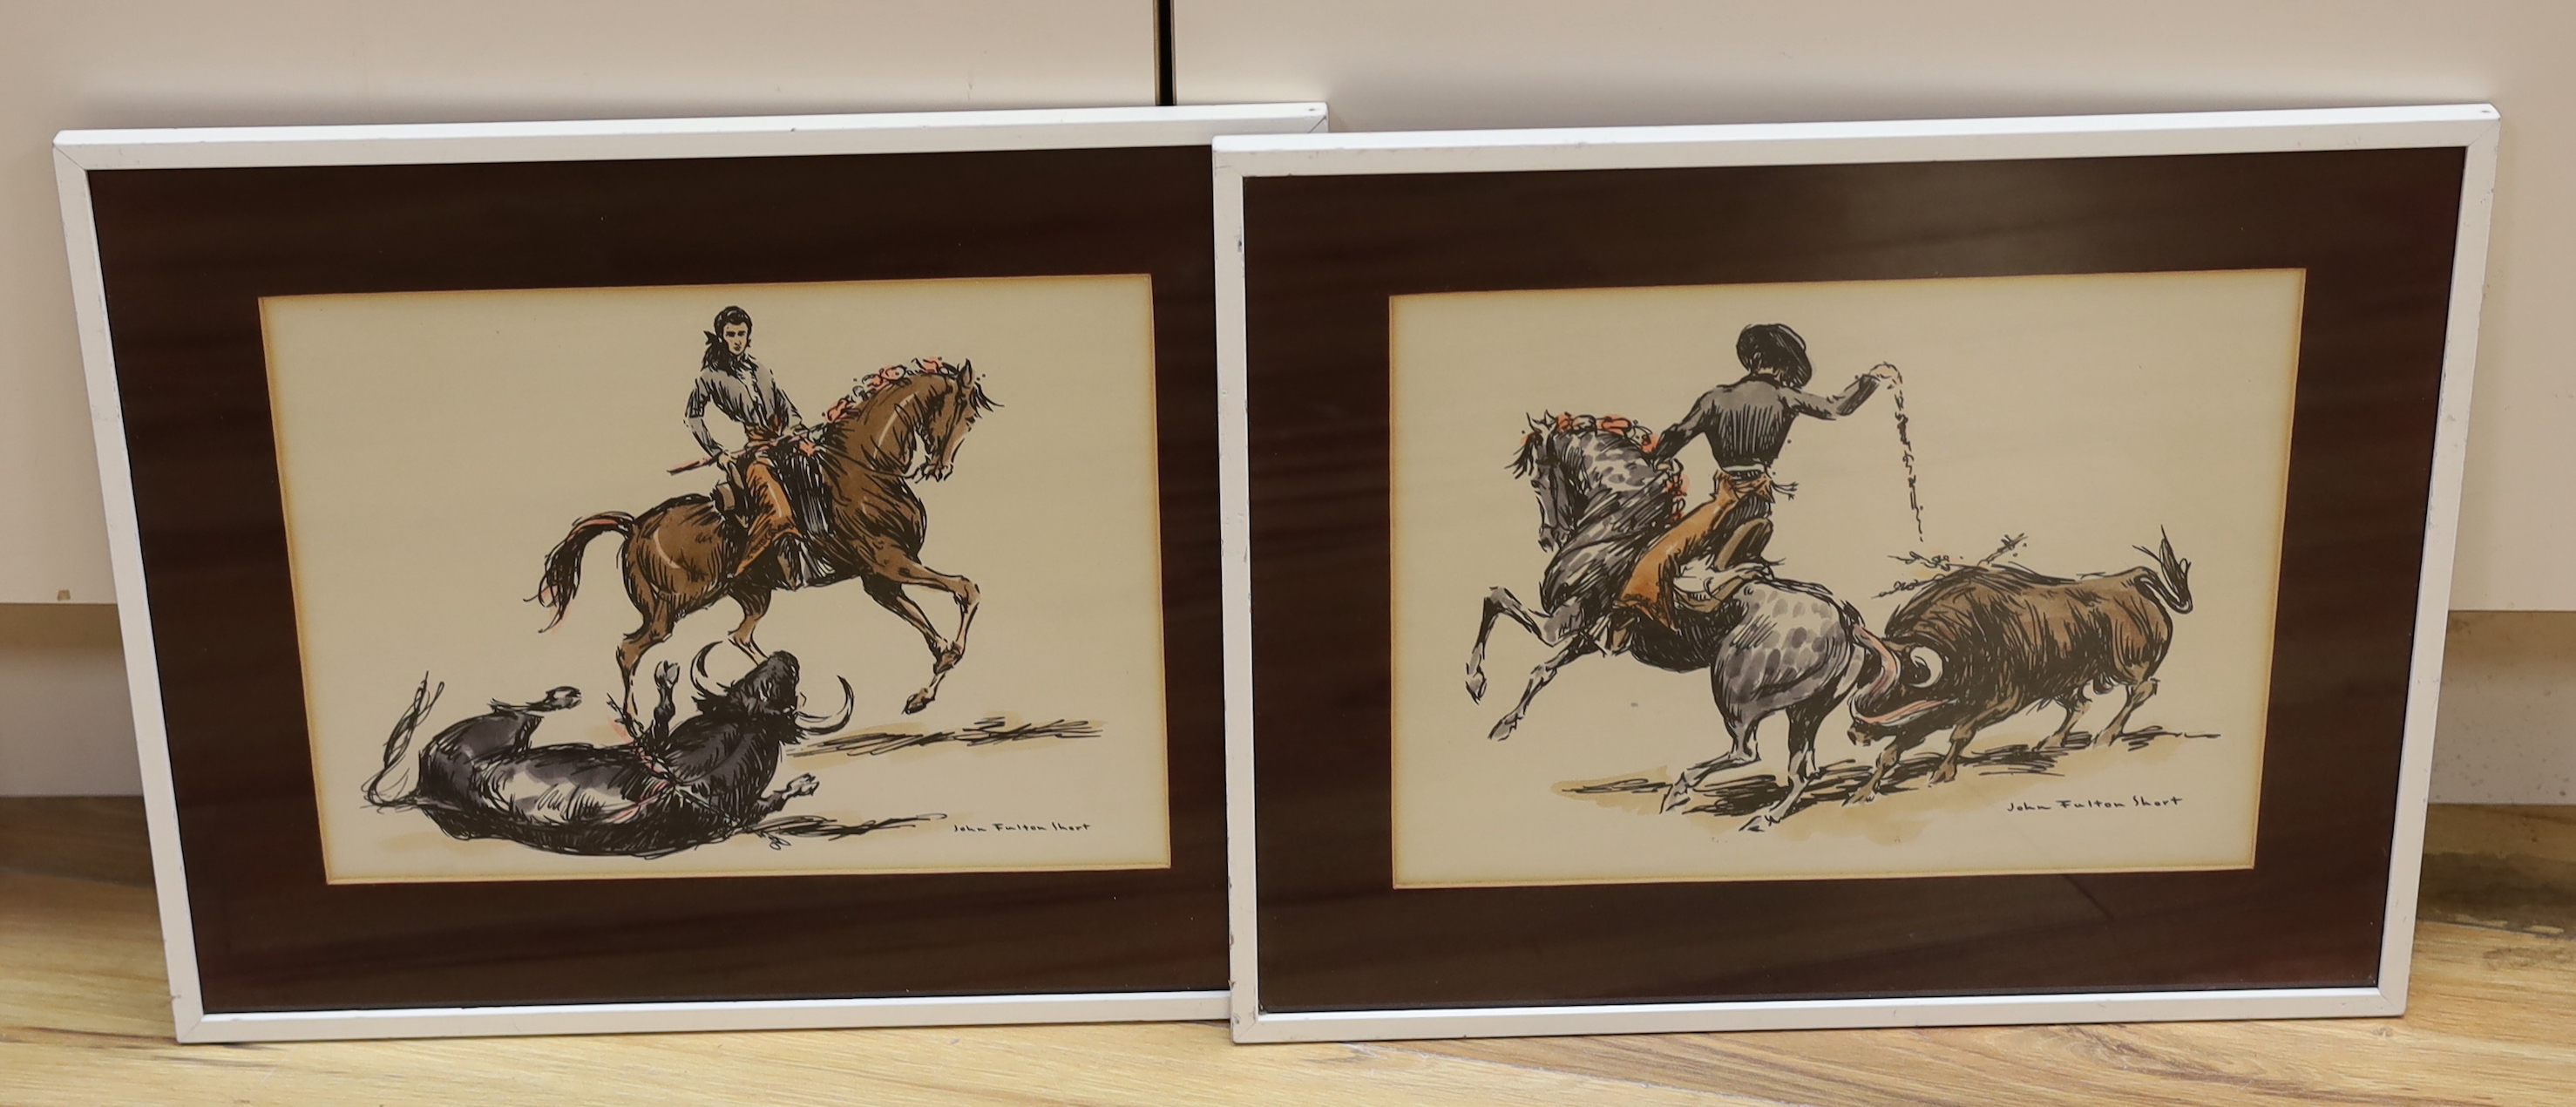 John Fulton Short (1932-1998), pair of ink and watercolours, Matadors and bulls, each signed, 22 x 30cm